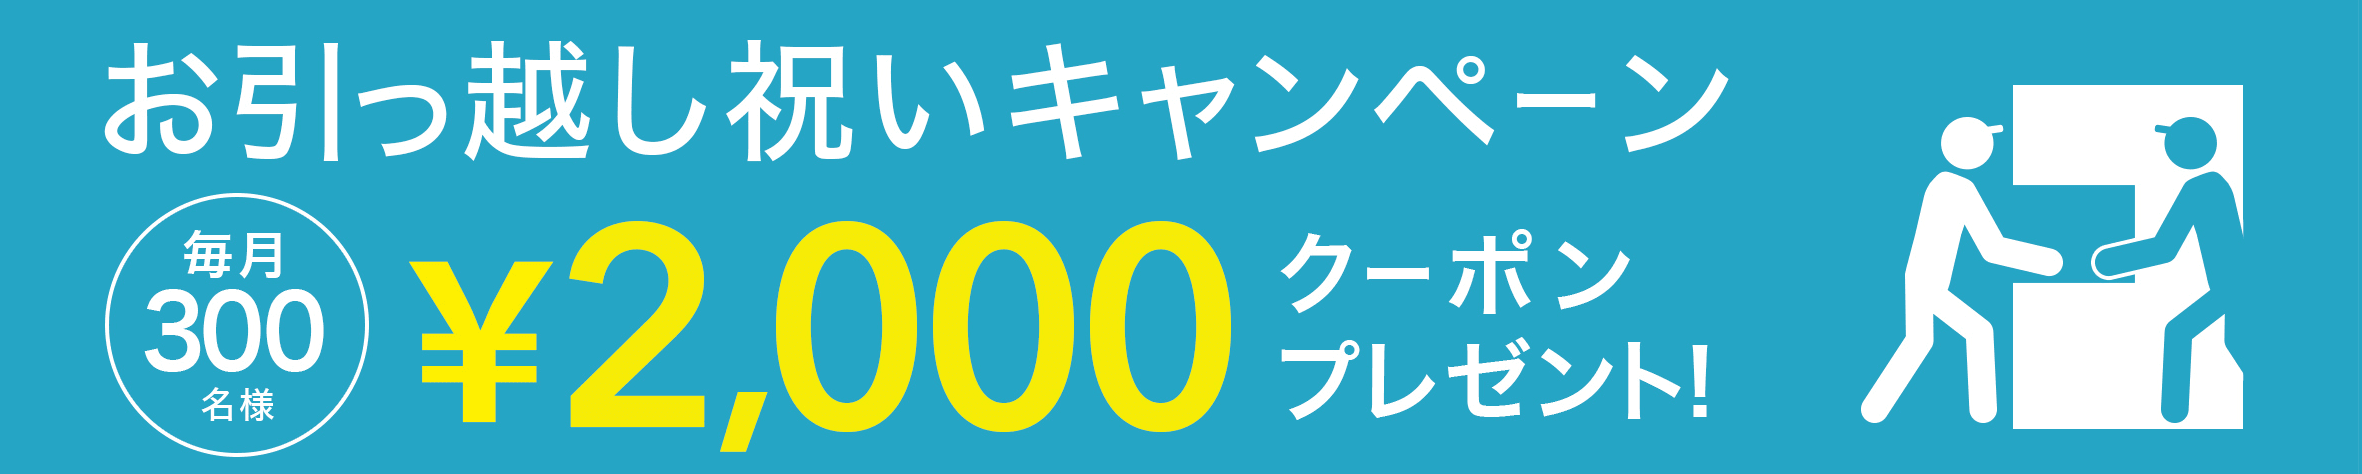 dinos(ディノス)【毎月300名限定】クーポン2000円分【お引越し祝い】